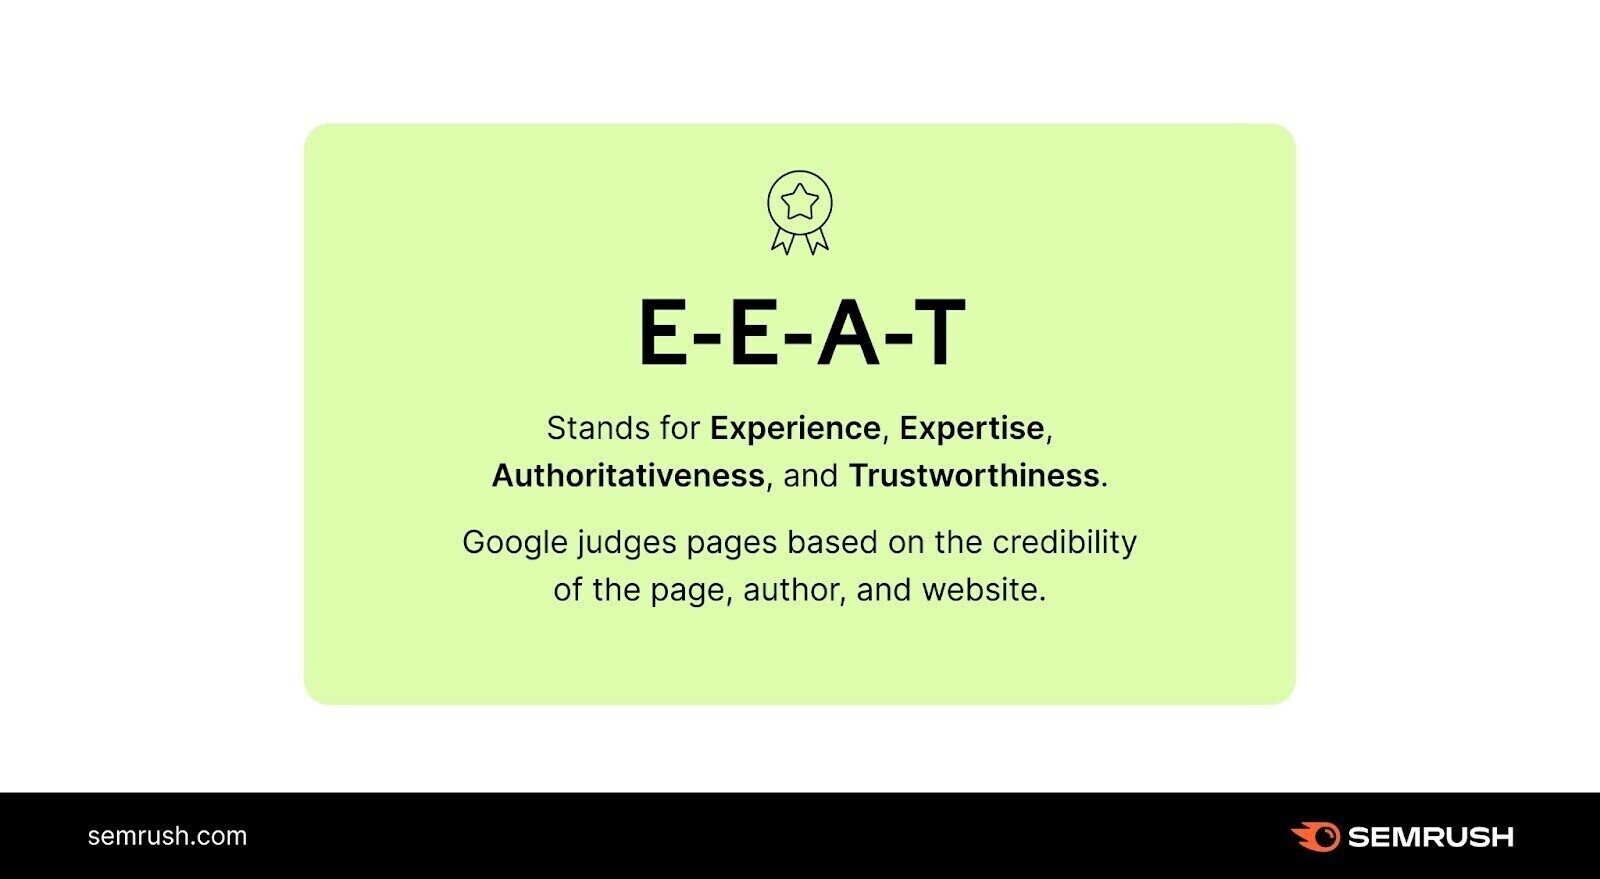 An image describing what E-E-A-T stands for